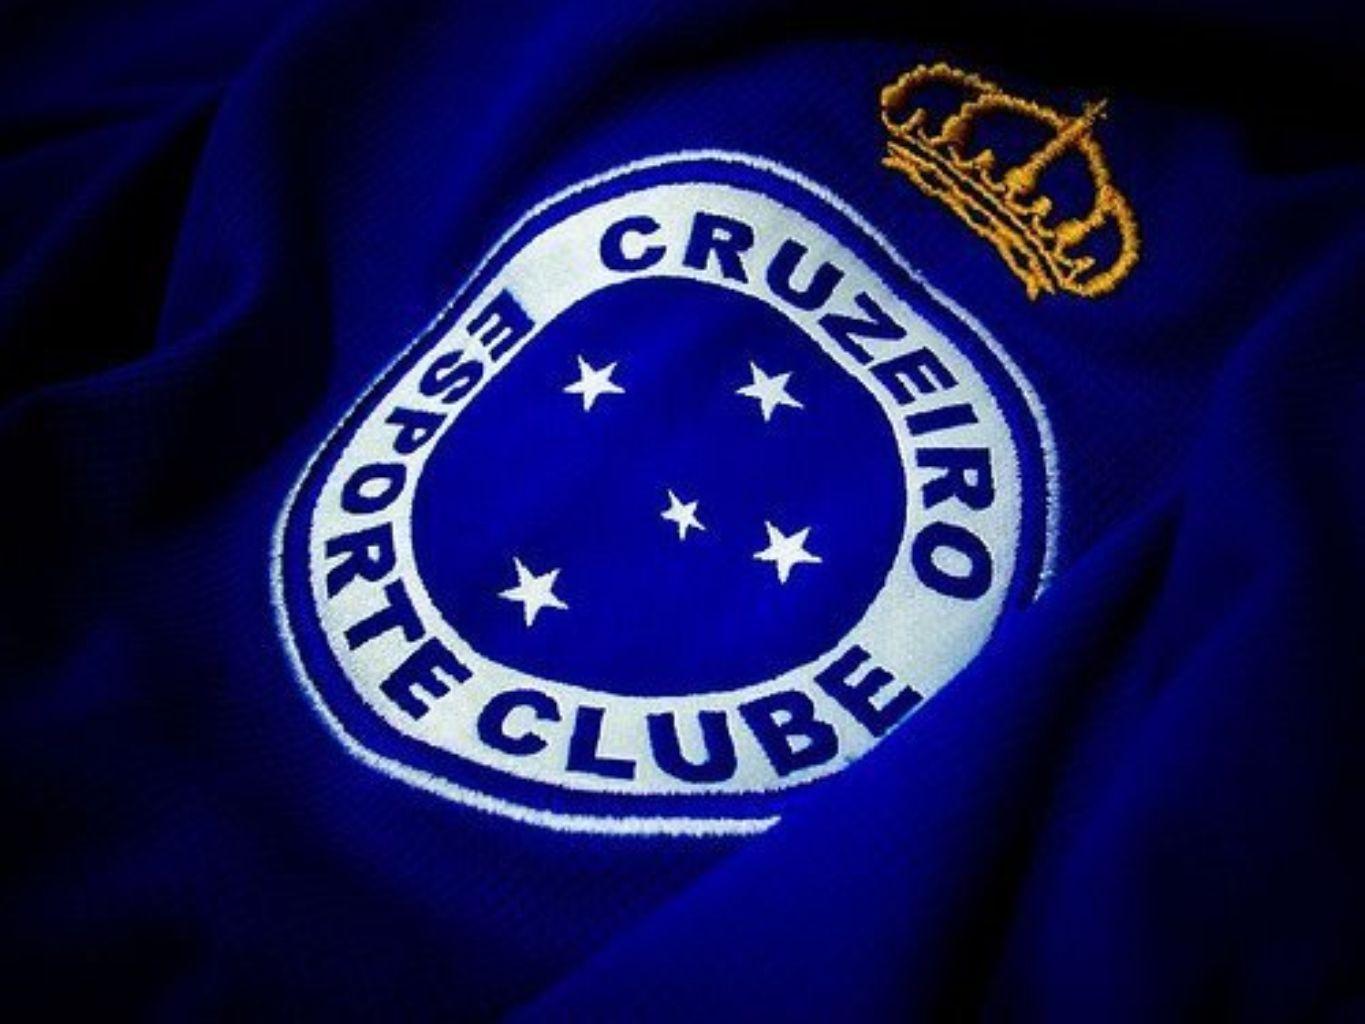 best image about Wallpaper Cruzeiro. Beautiful